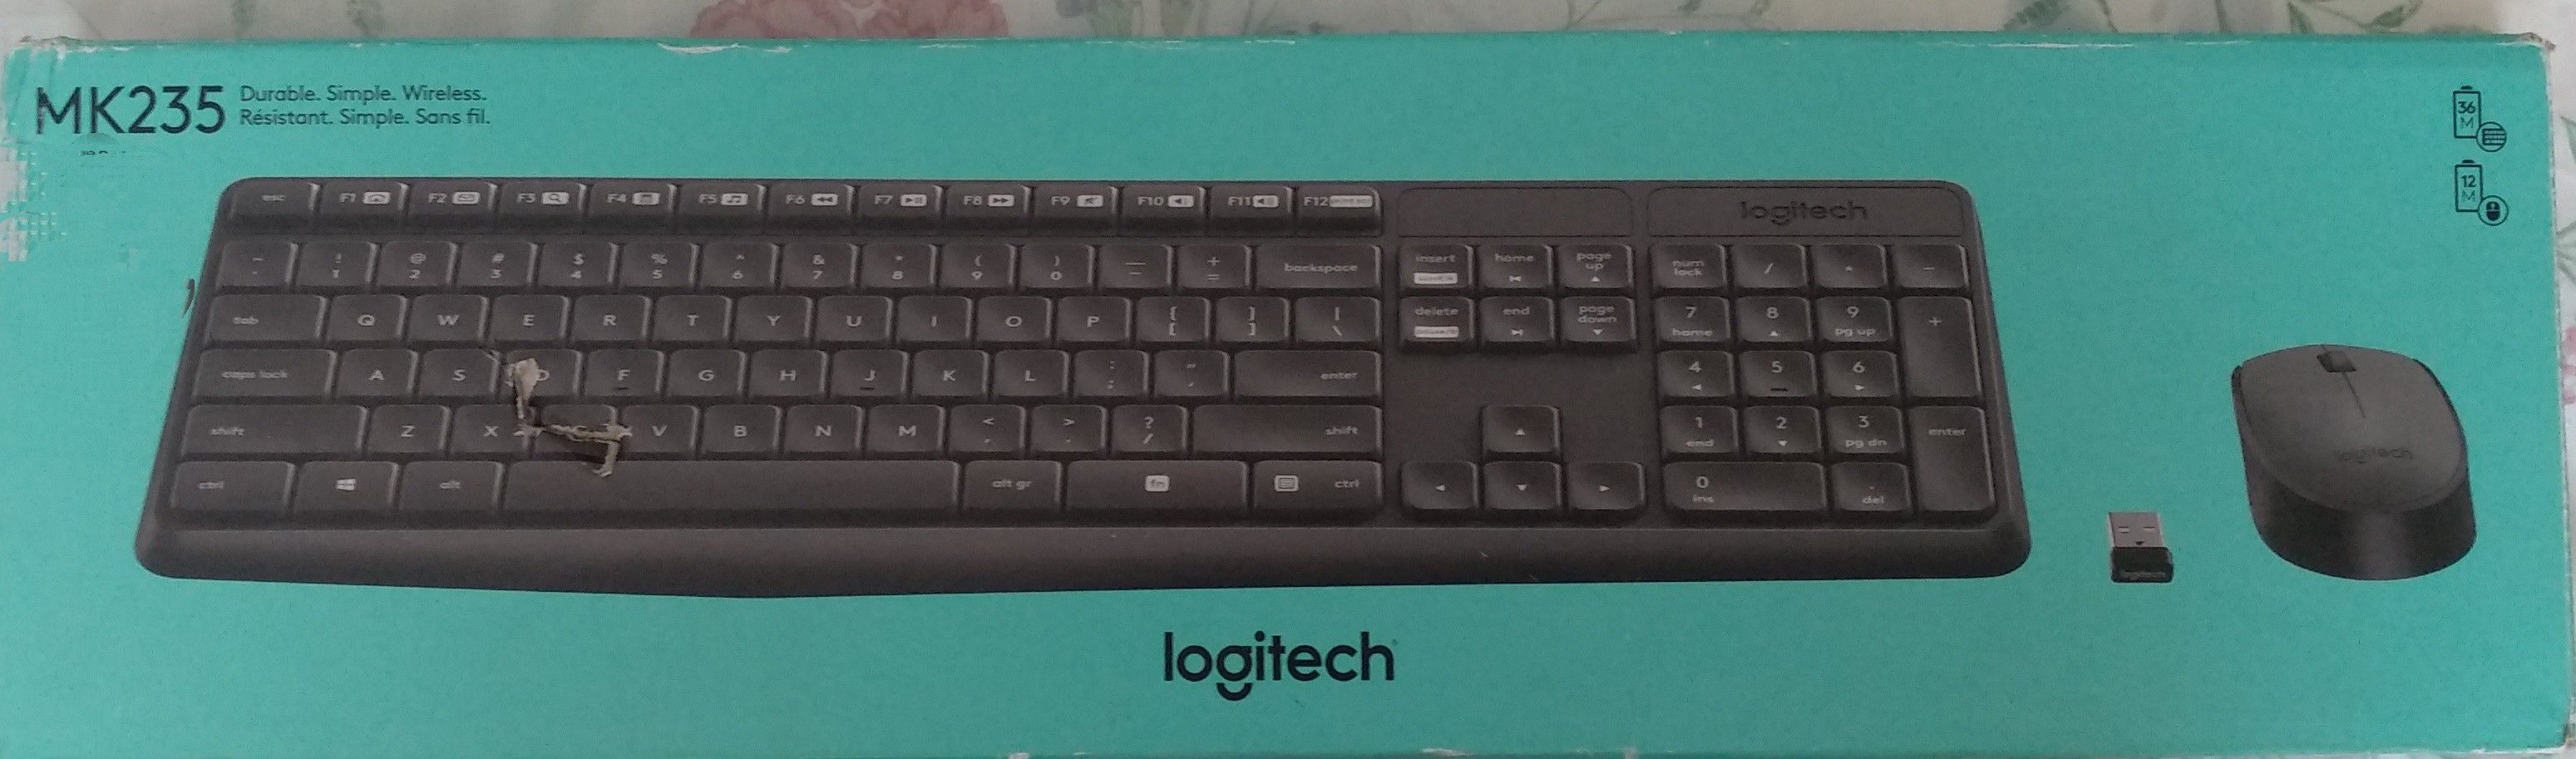 Logitech wireless keyboard and mouse combo (New)